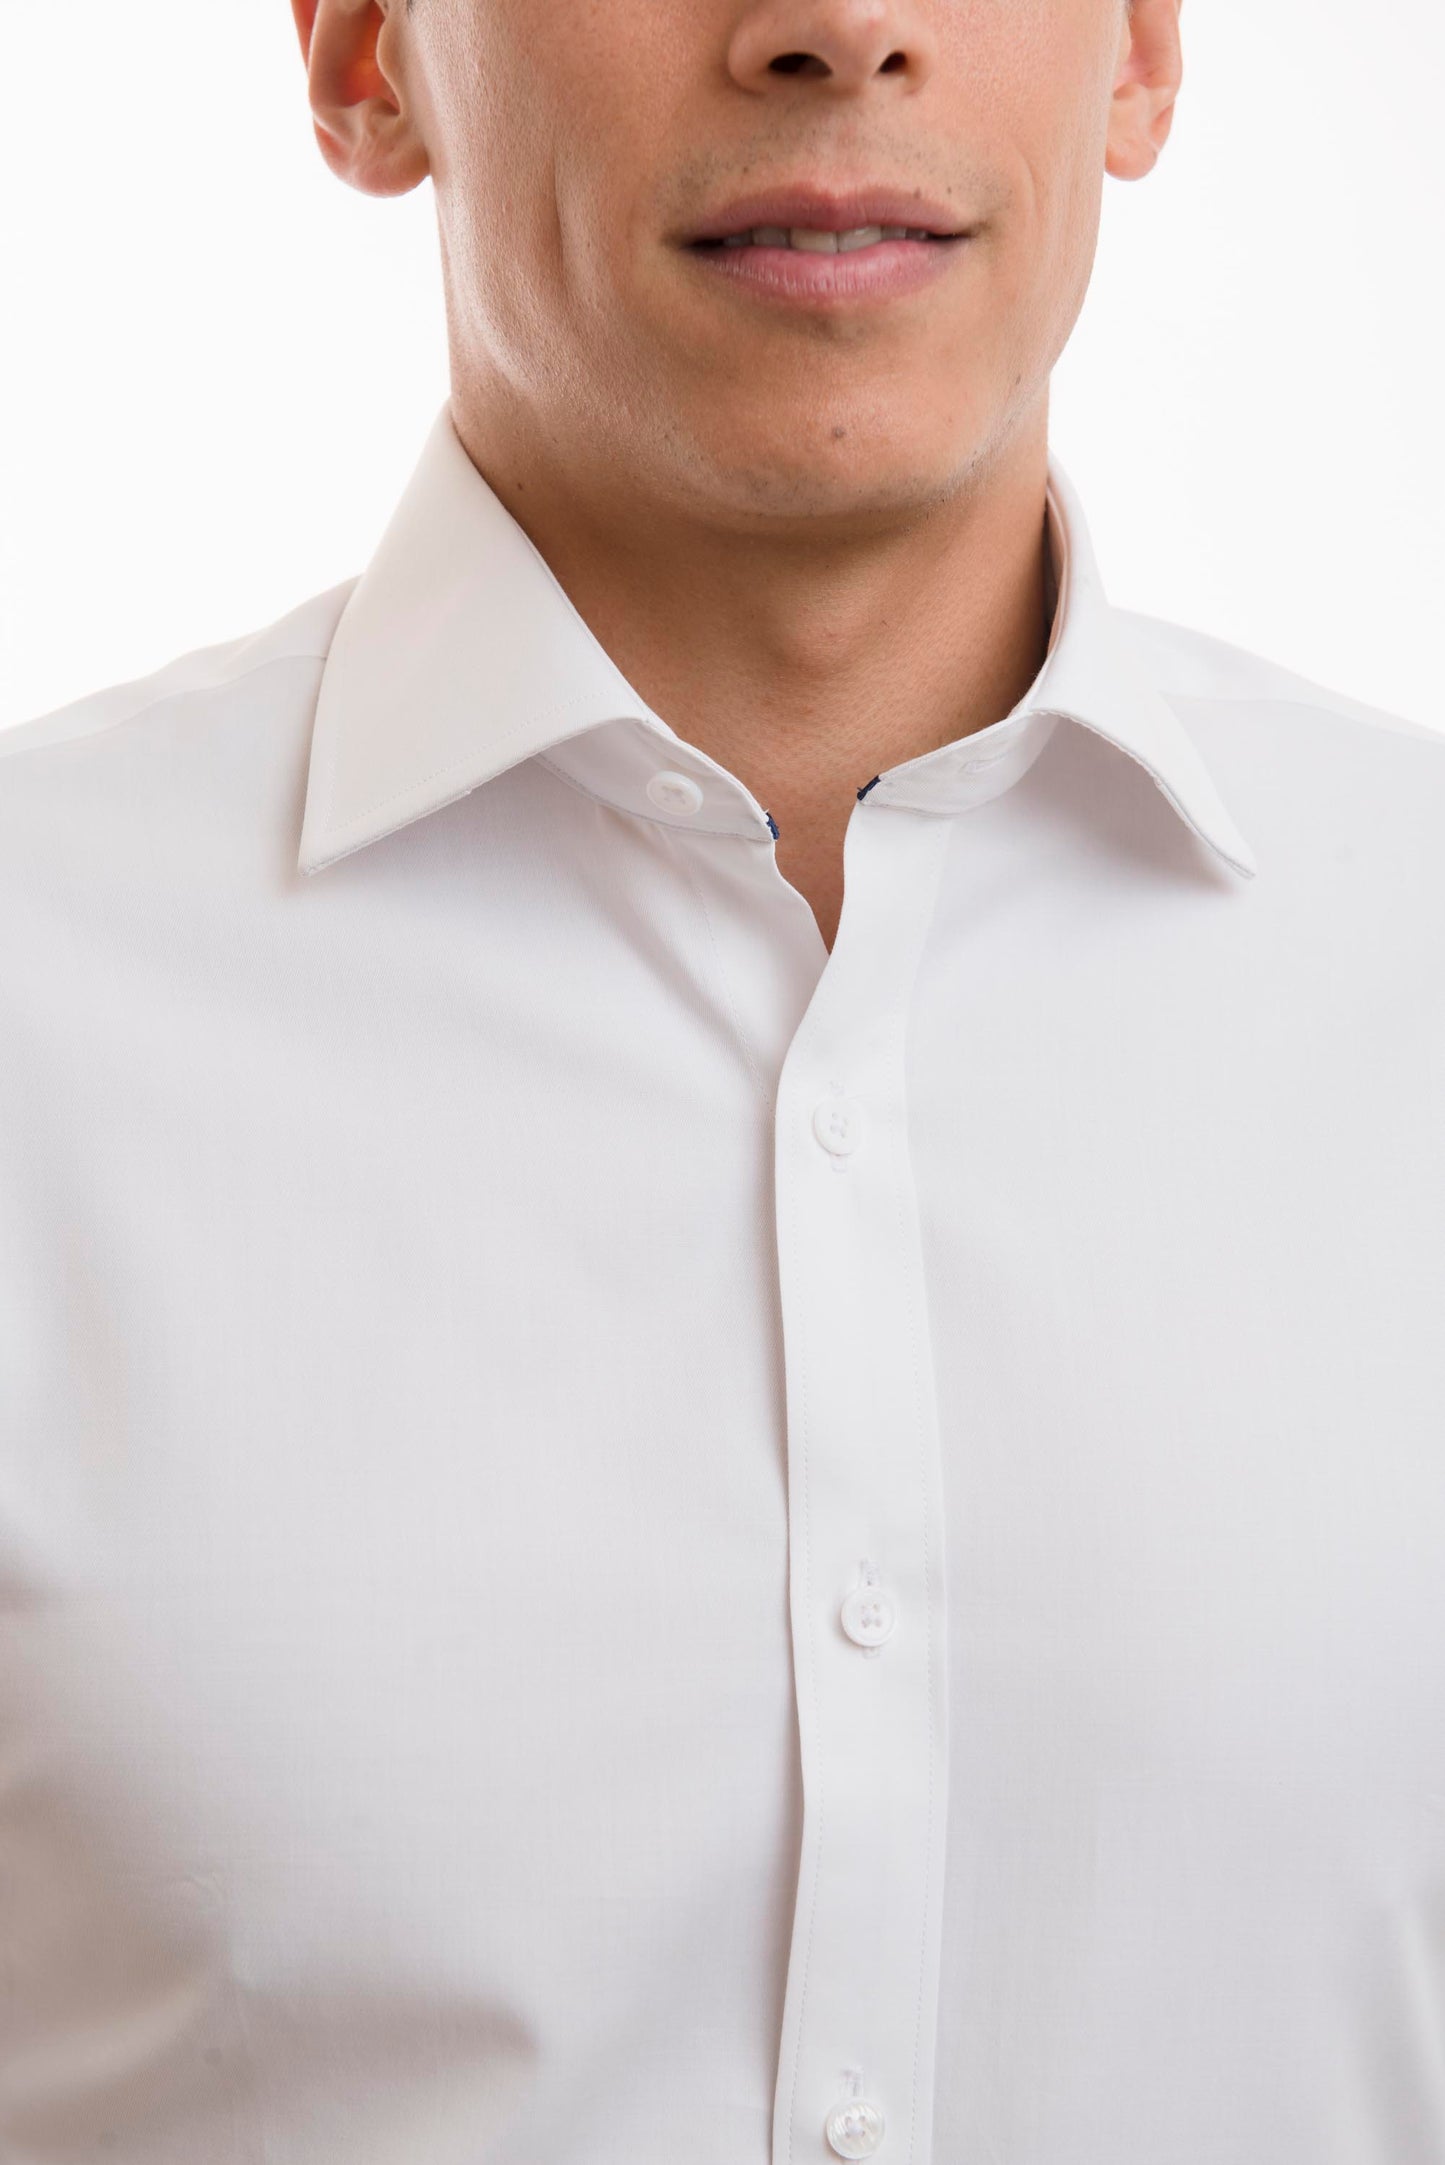 TEXO SmartWeave | Made-to-Order Dress Shirt (White)